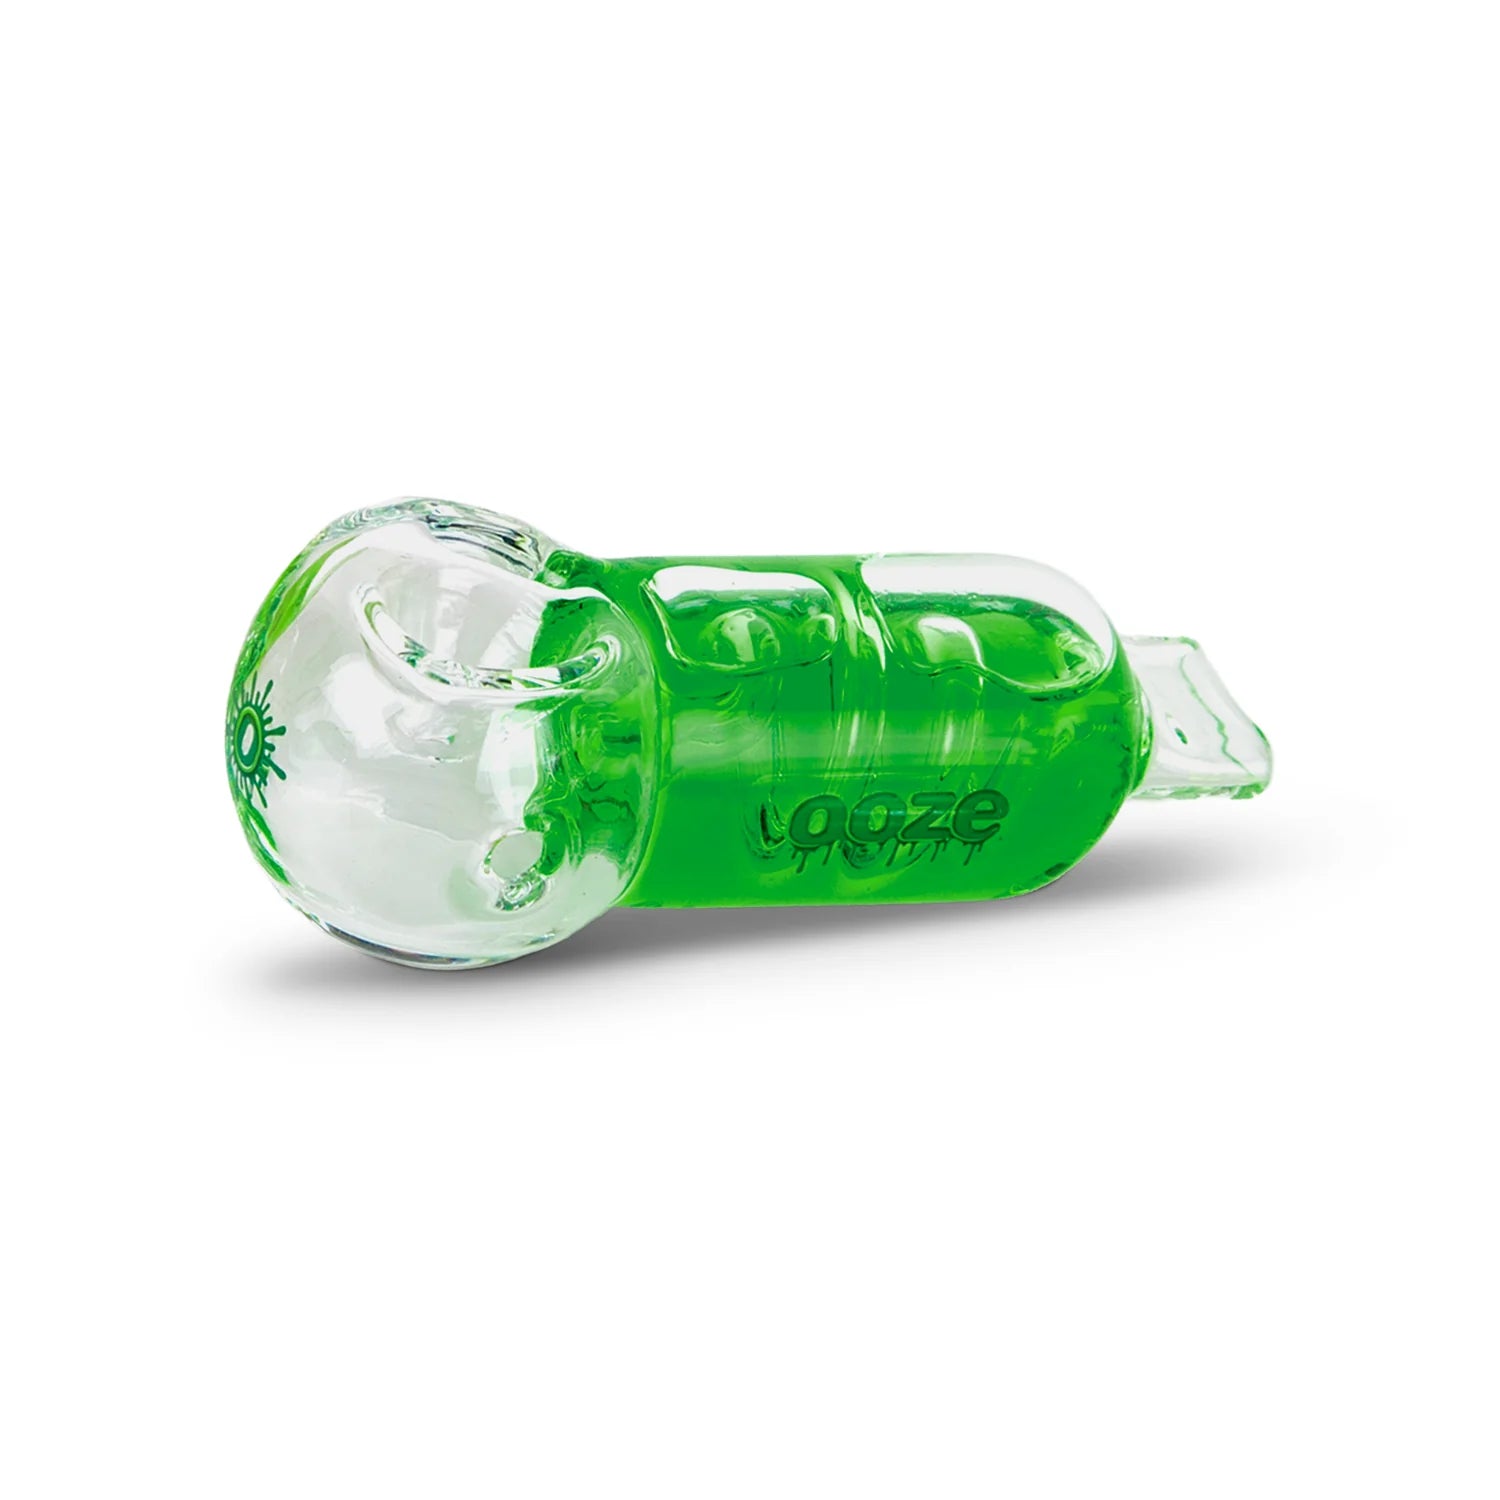 Ooze Cryo Glycerin Glass Bowl - Freezable Green